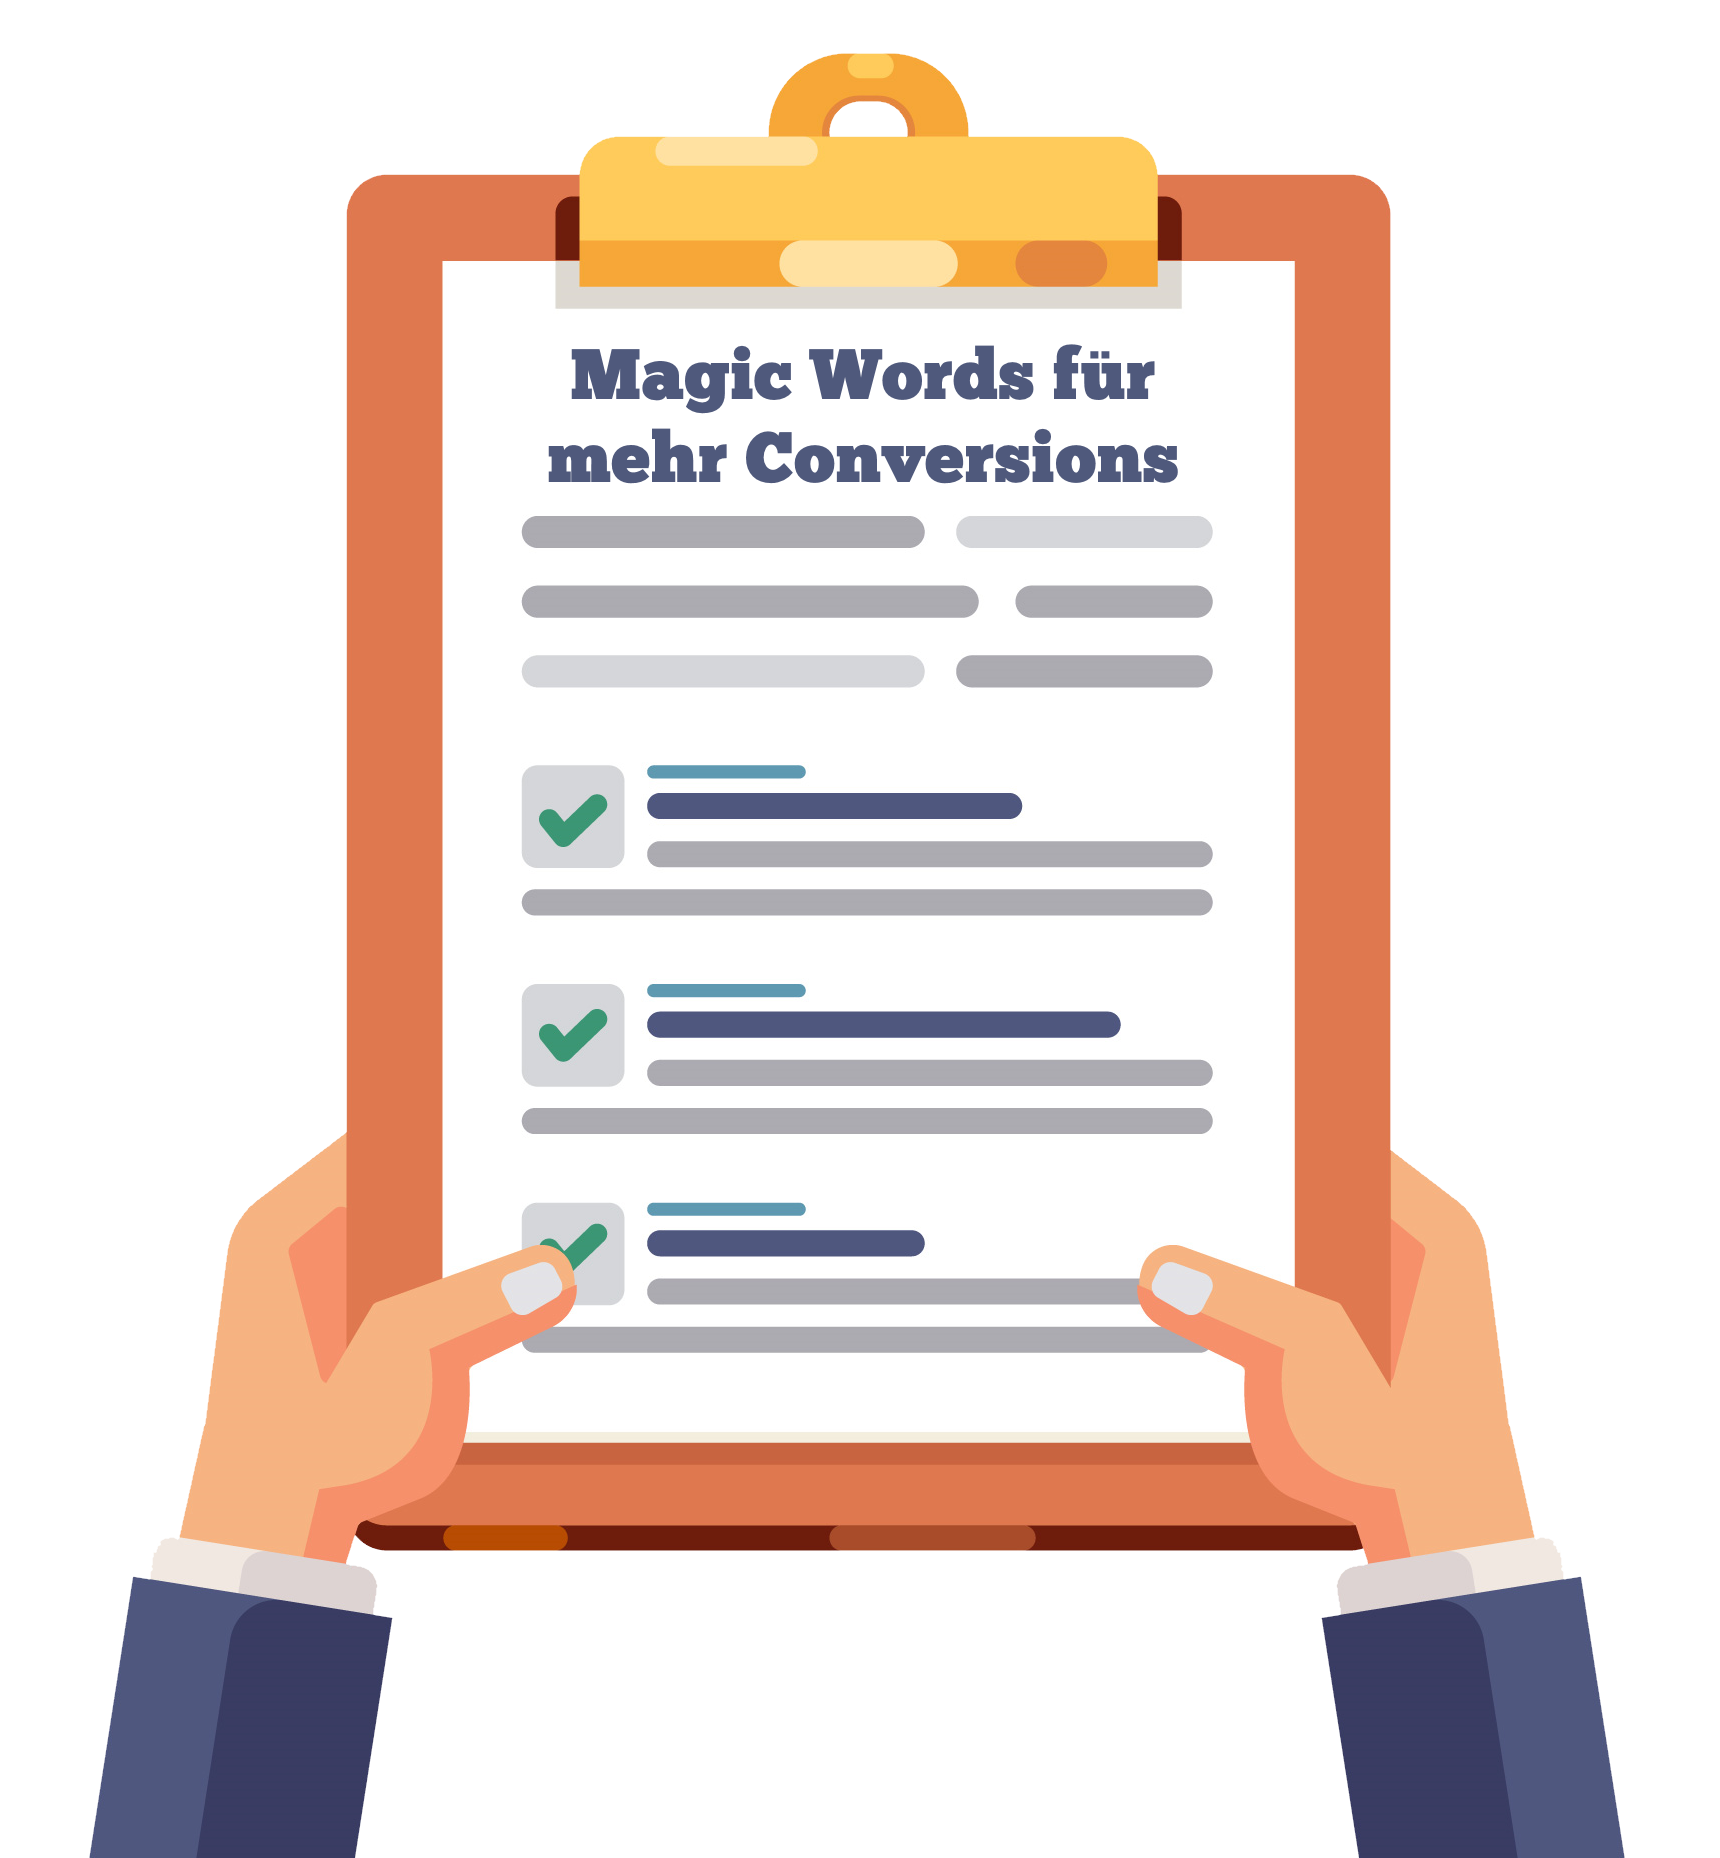 magic word list download